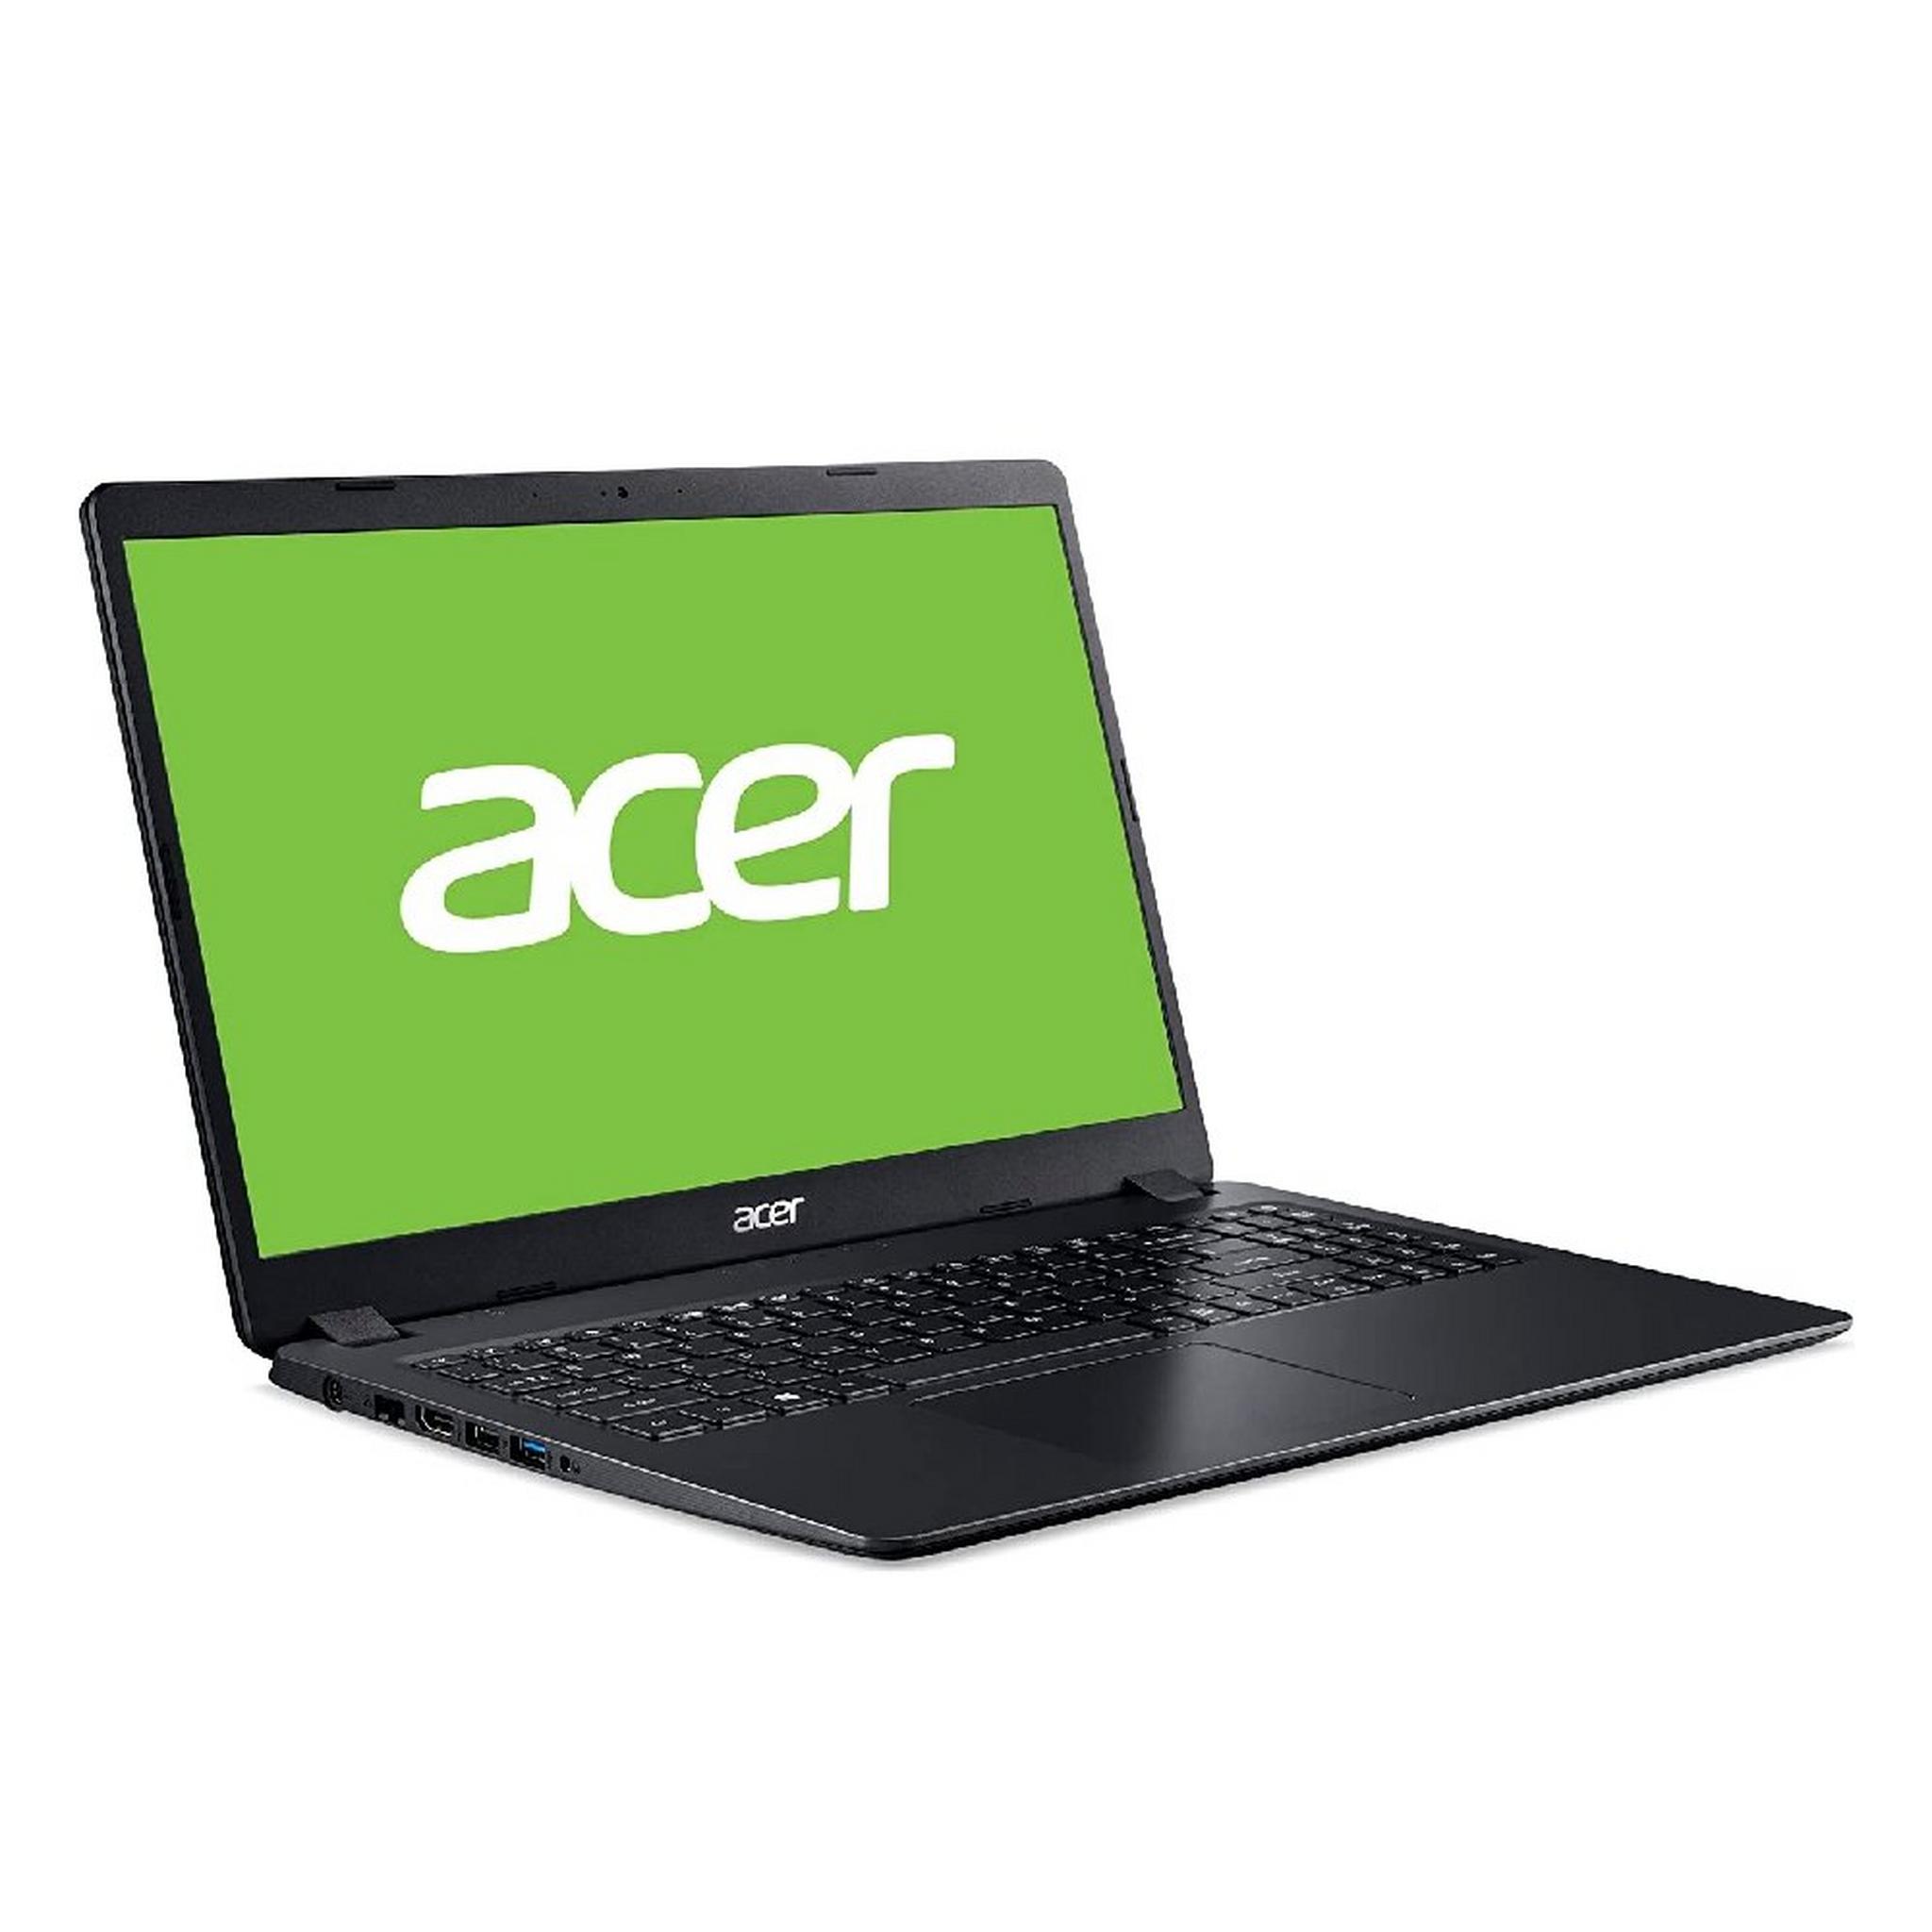 Acer Aspire 3 - Intel Core i3-1005G1 - 4GB DDR4 RAM - 128GB SSD Storage - Intel UHD Graphics - 15.6" FHD ComfyView Display - Win 11 - Black